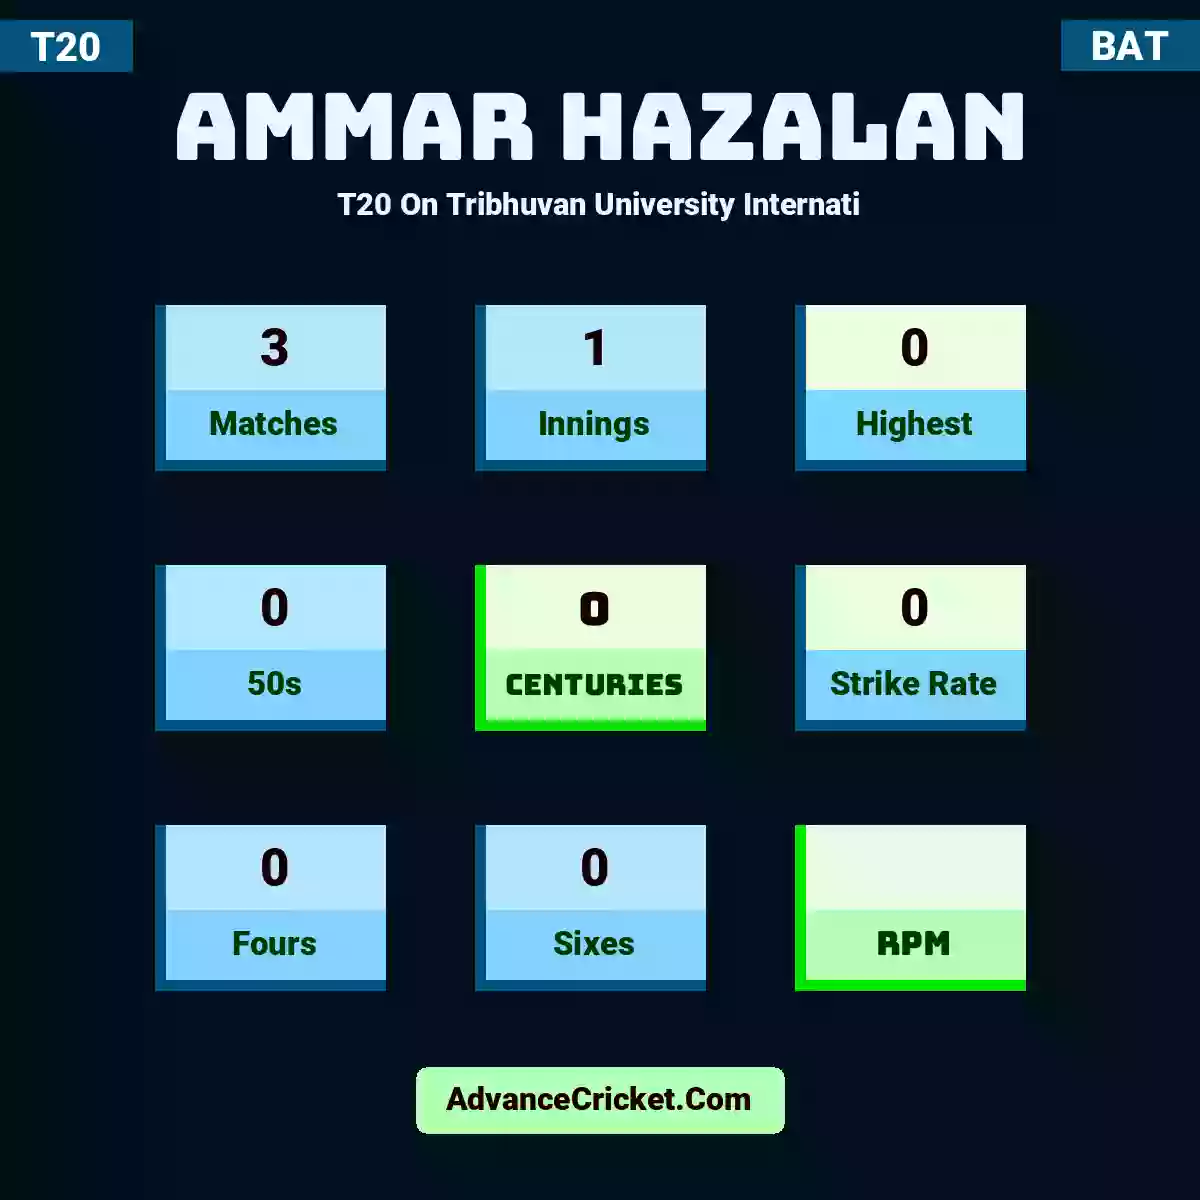 Ammar Hazalan T20  On Tribhuvan University Internati, Ammar Hazalan played 3 matches, scored 0 runs as highest, 0 half-centuries, and 0 centuries, with a strike rate of 0. A.Hazalan hit 0 fours and 0 sixes.